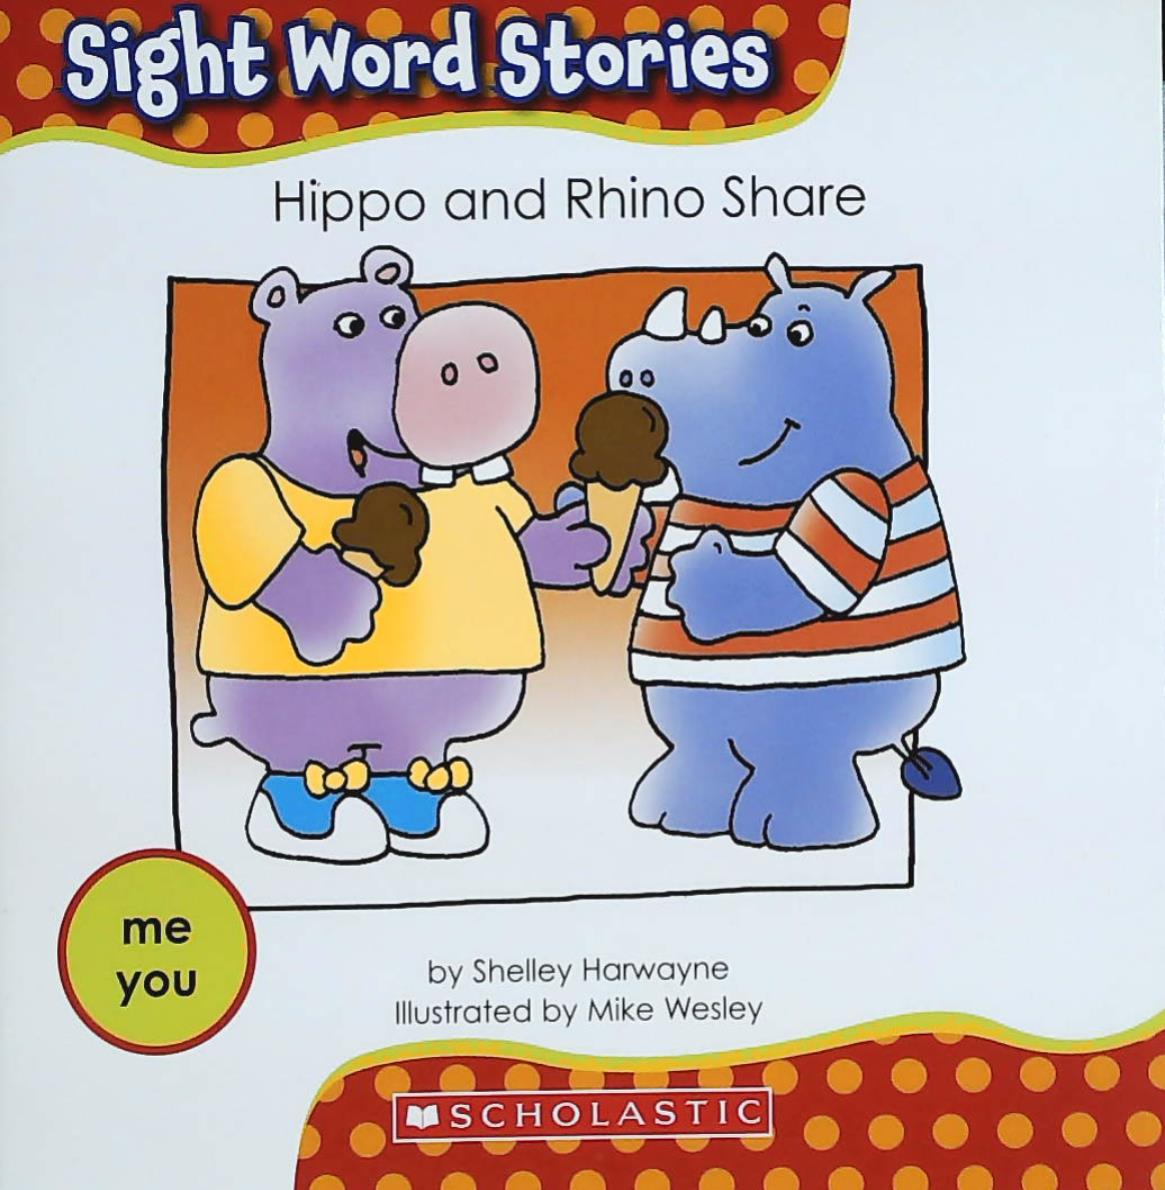 Livre ISBN 0545167701 Sight Word Stories : Hippo and Rhino Share (Shelley Harwayne)